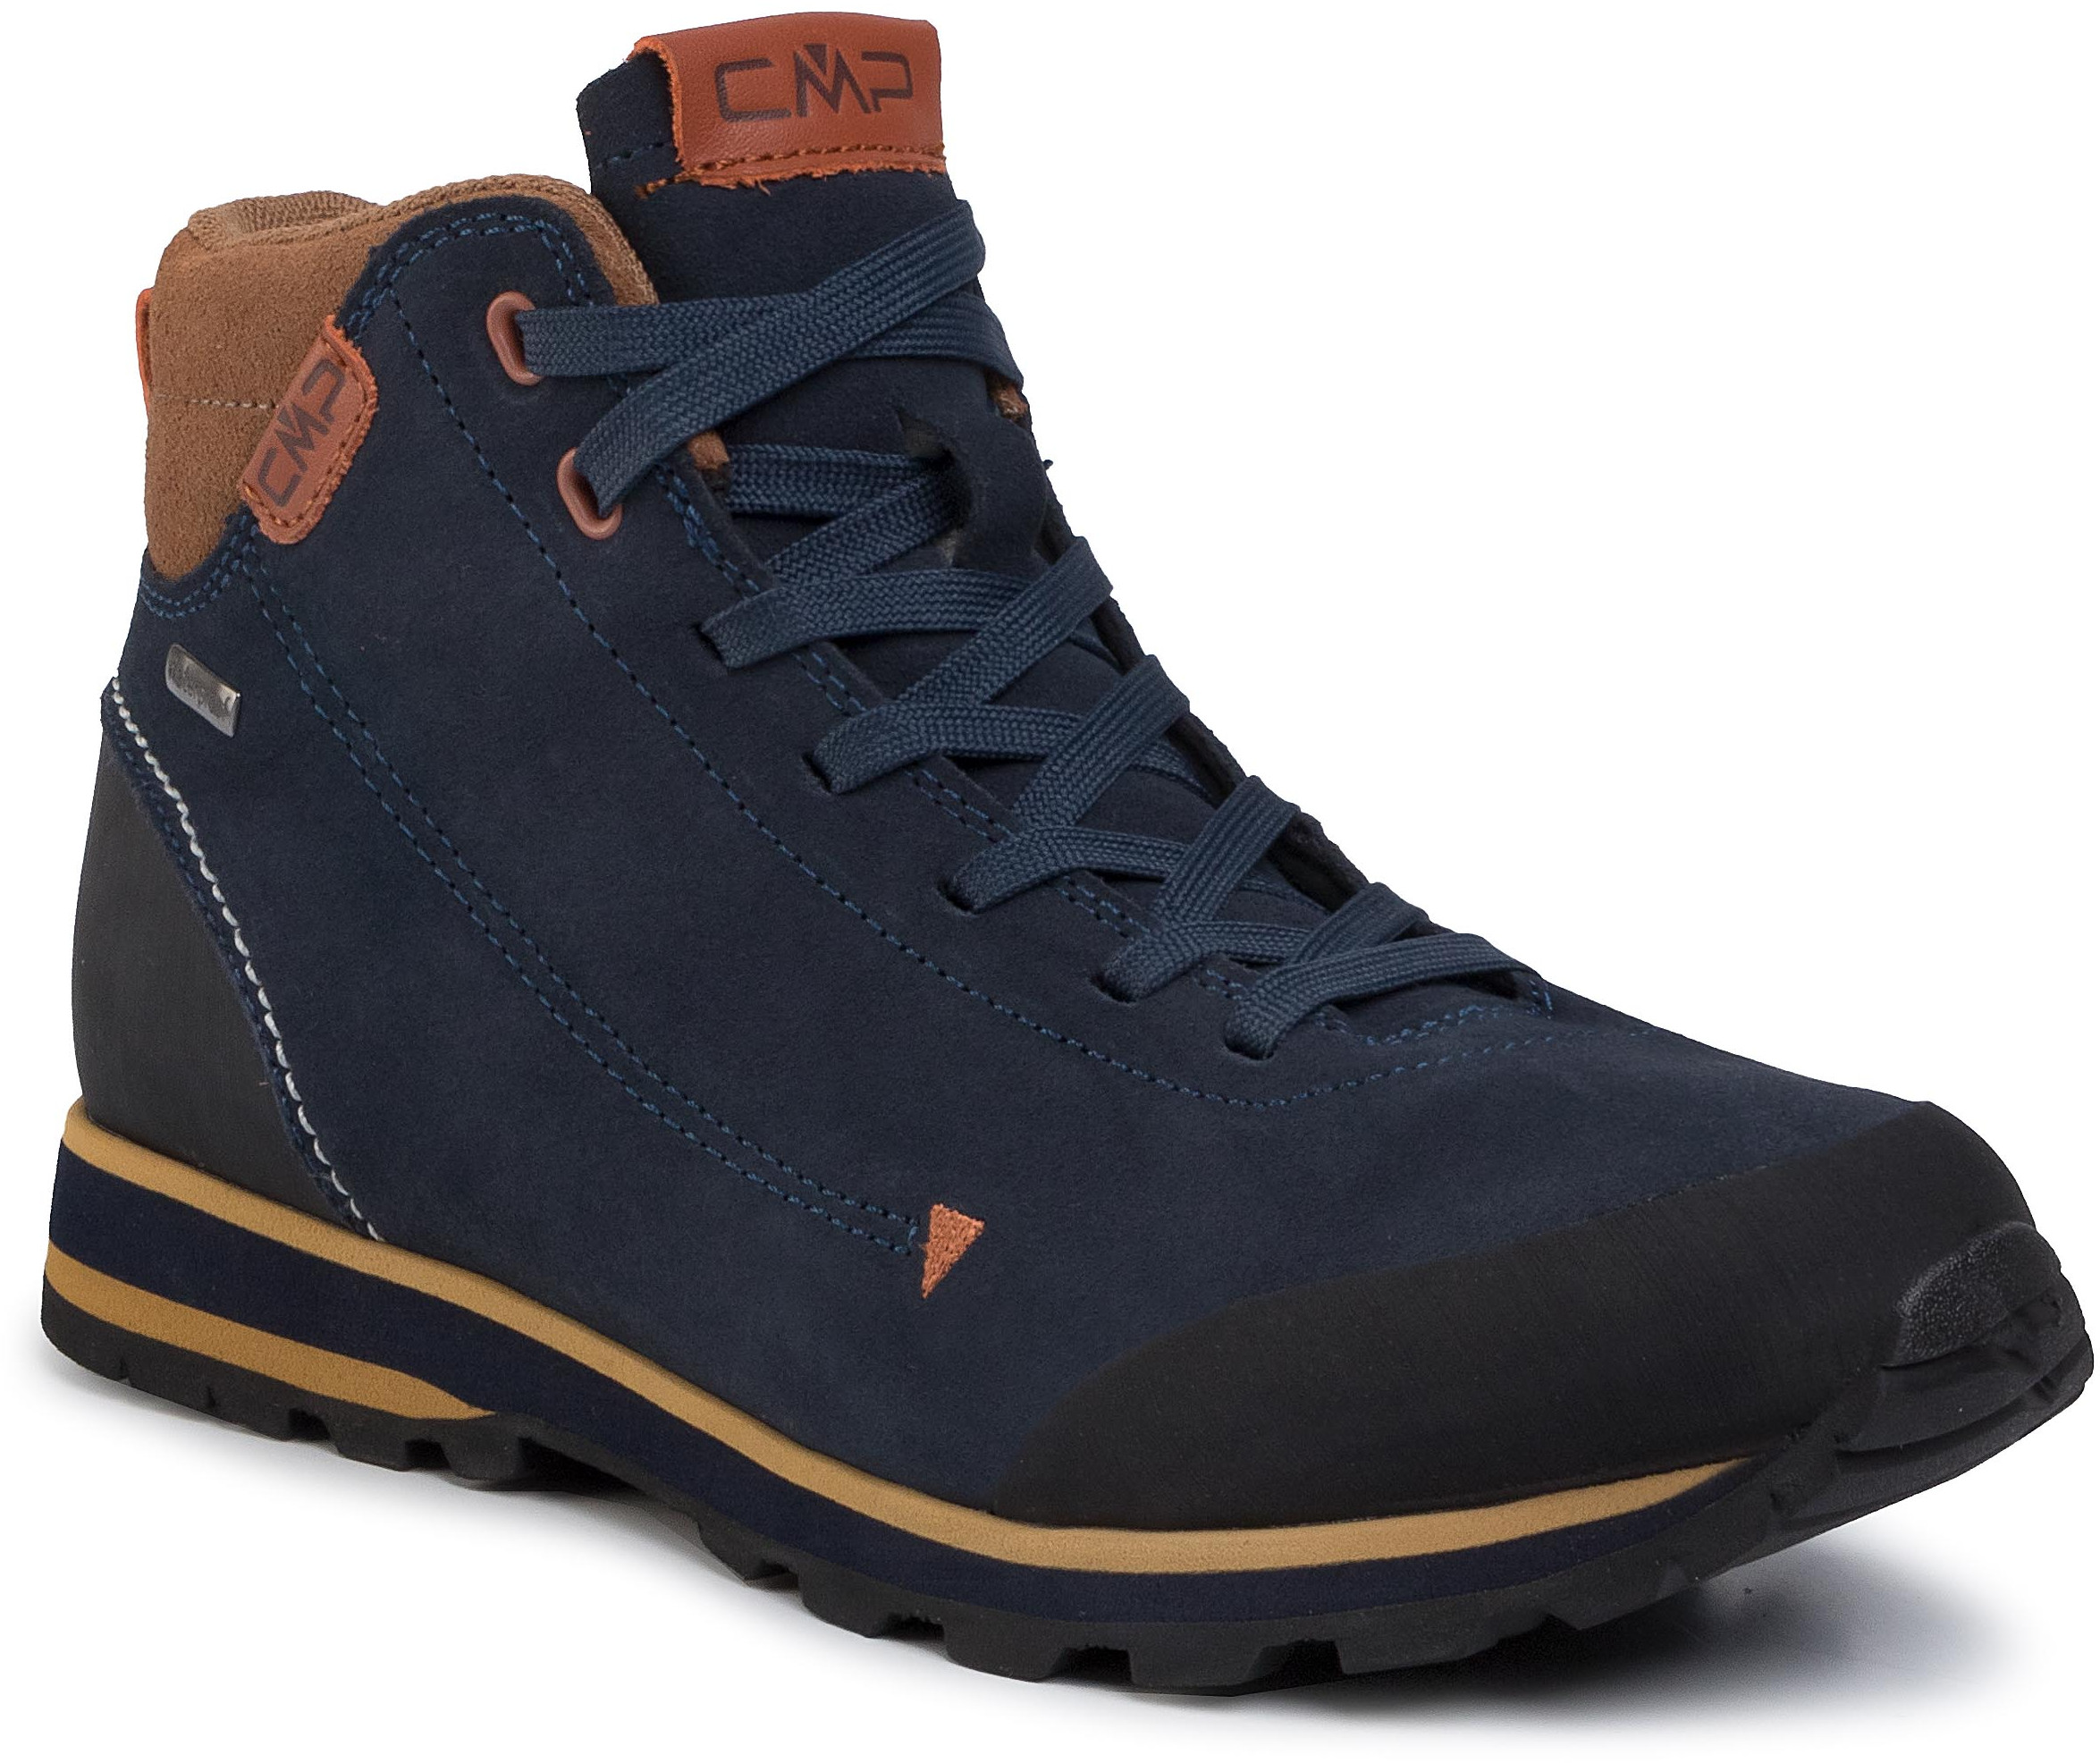 CMP Trekkingi Elettra Mid Hiking Shoes Wp 38Q4597 Black Blue N950